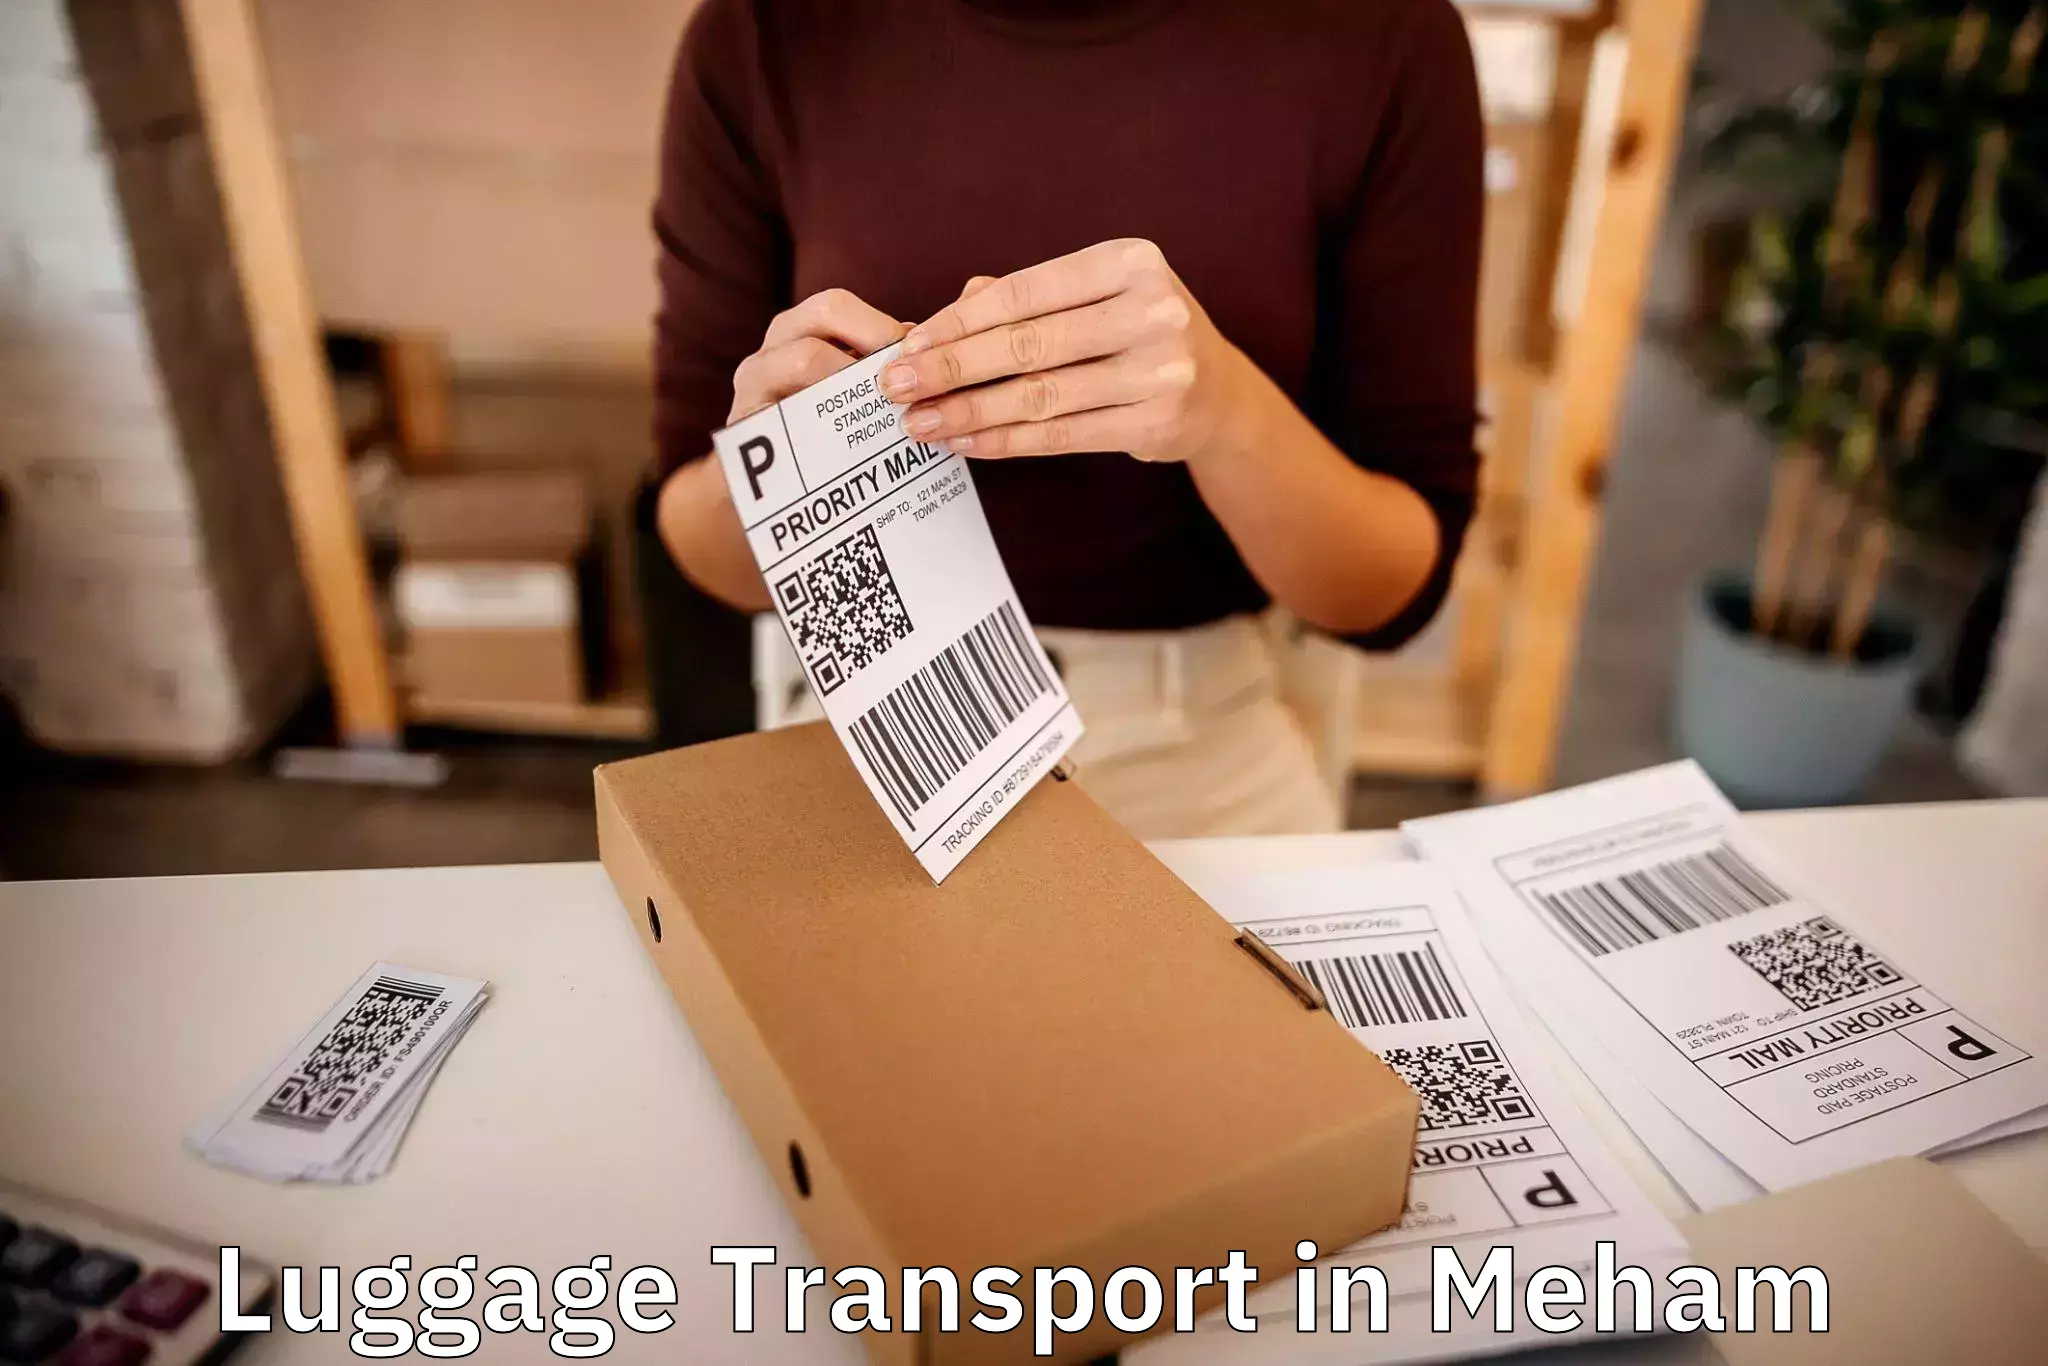 Tailored baggage transport in Meham